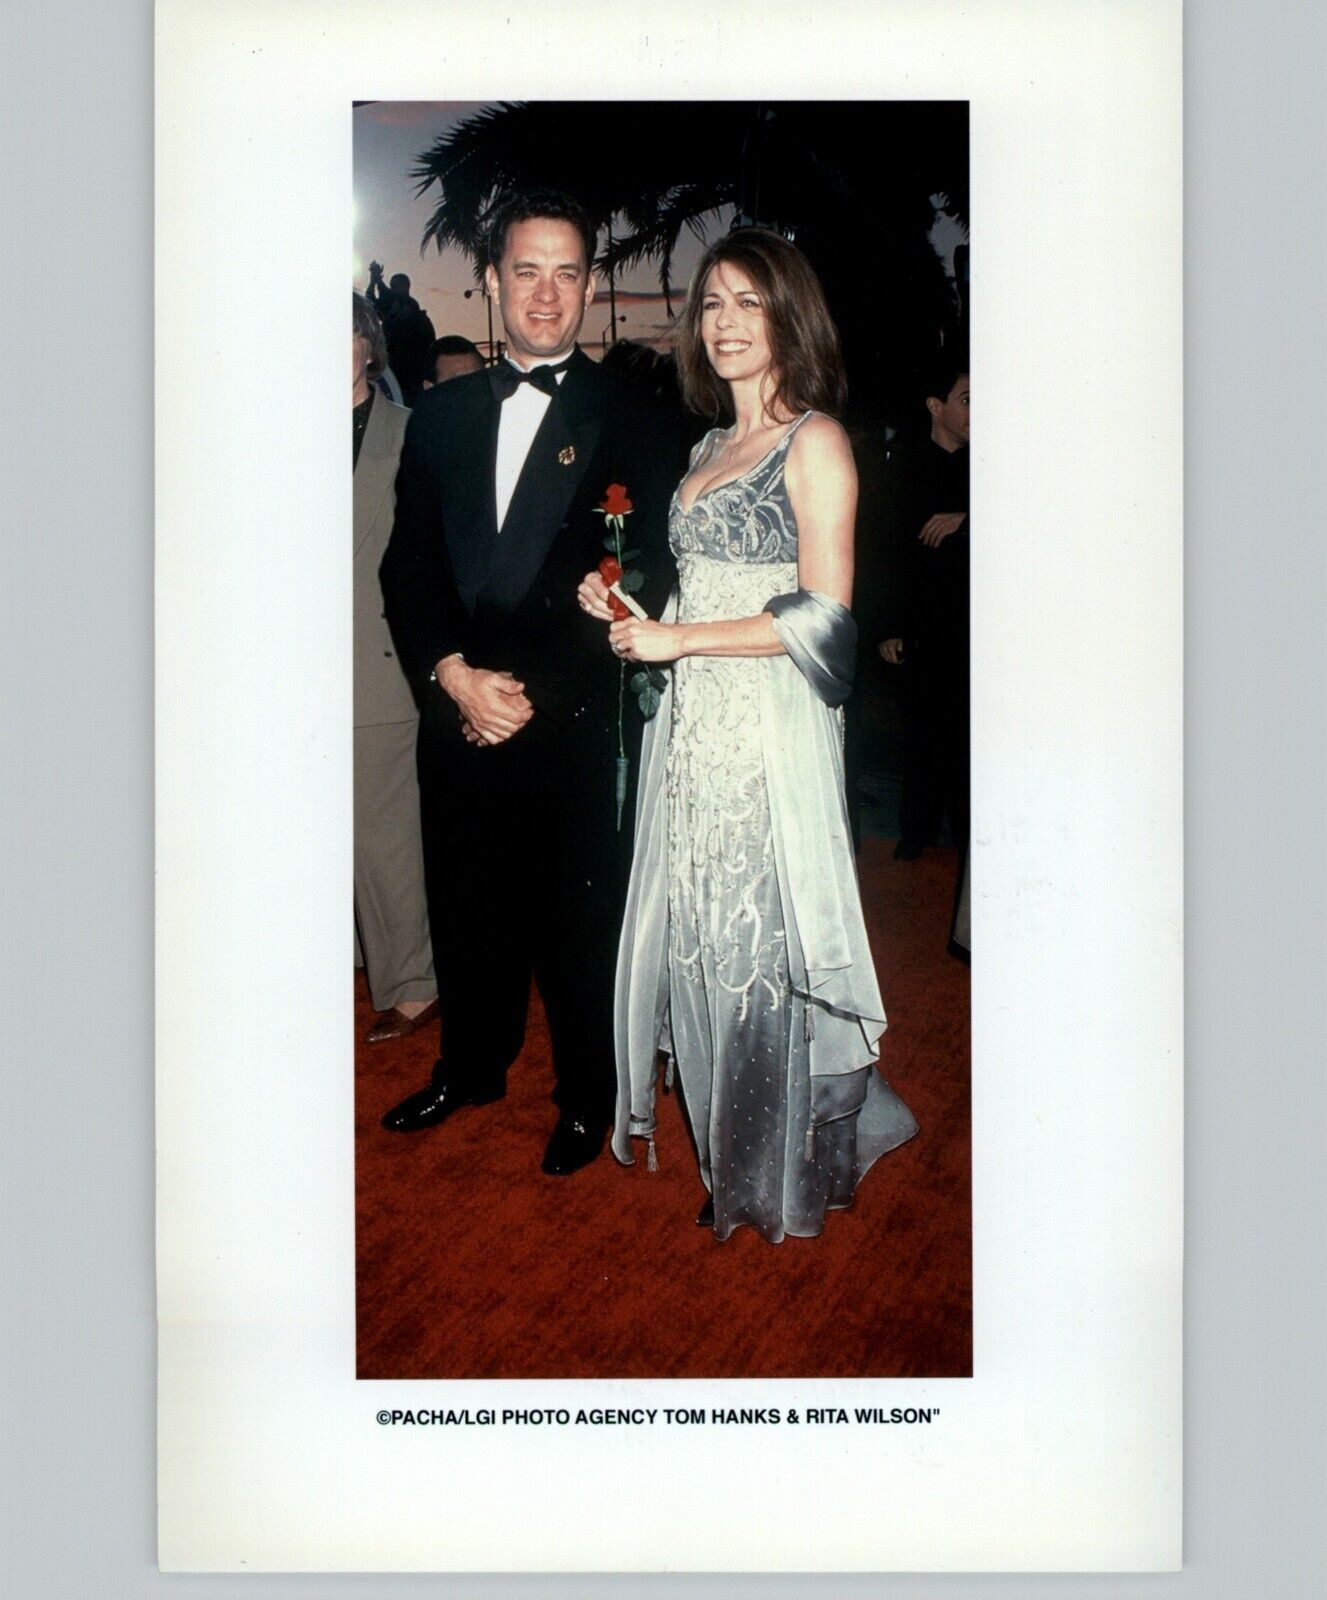 Tom Hanks & Rita Wilson Hanks Red Carpet Photo Movie Premiere Vintage 1990s